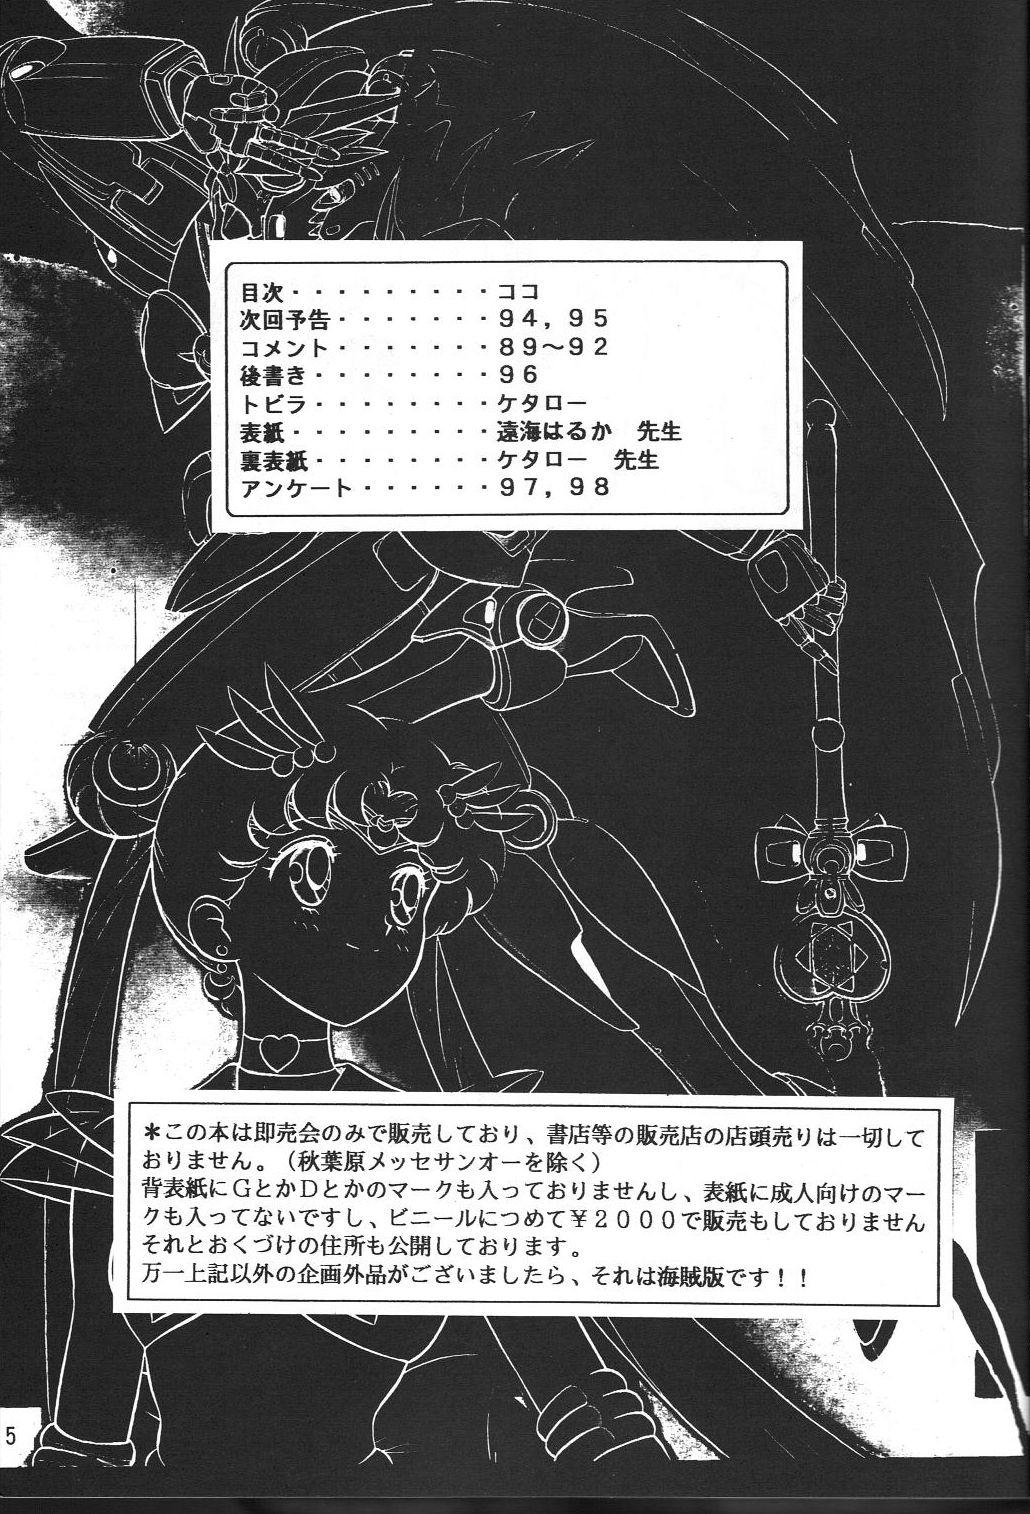 Balls Jiyuu Tamashii - Sailor moon Ah my goddess Tenchi muyo Free Fucking - Page 4